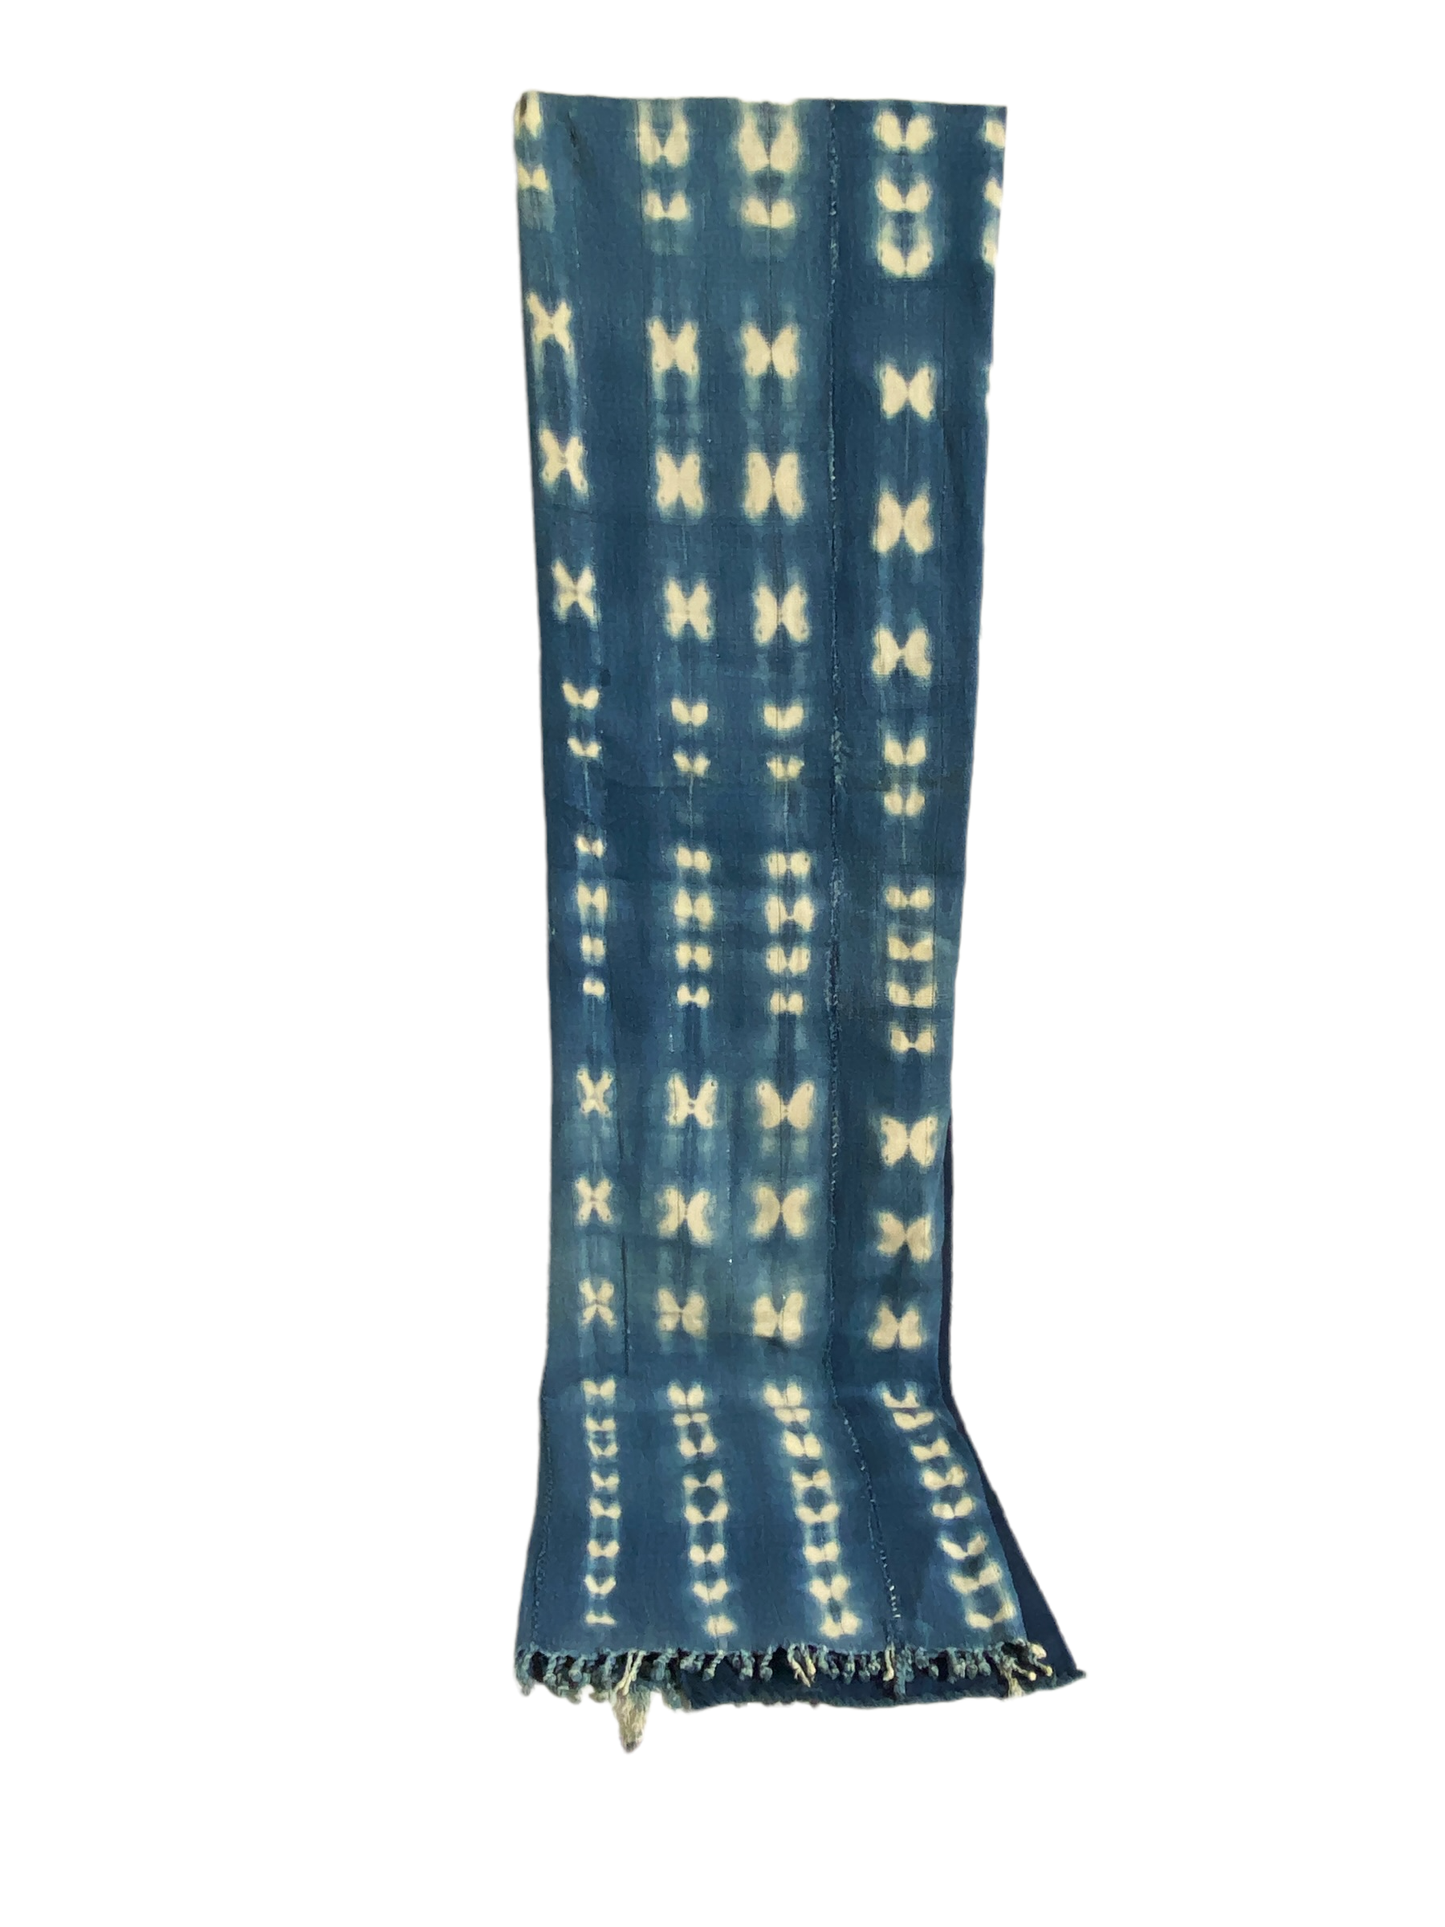 #4892 Fine Old Weaving Dogon Mali Indigo  Cloth Textile 58" by 45"